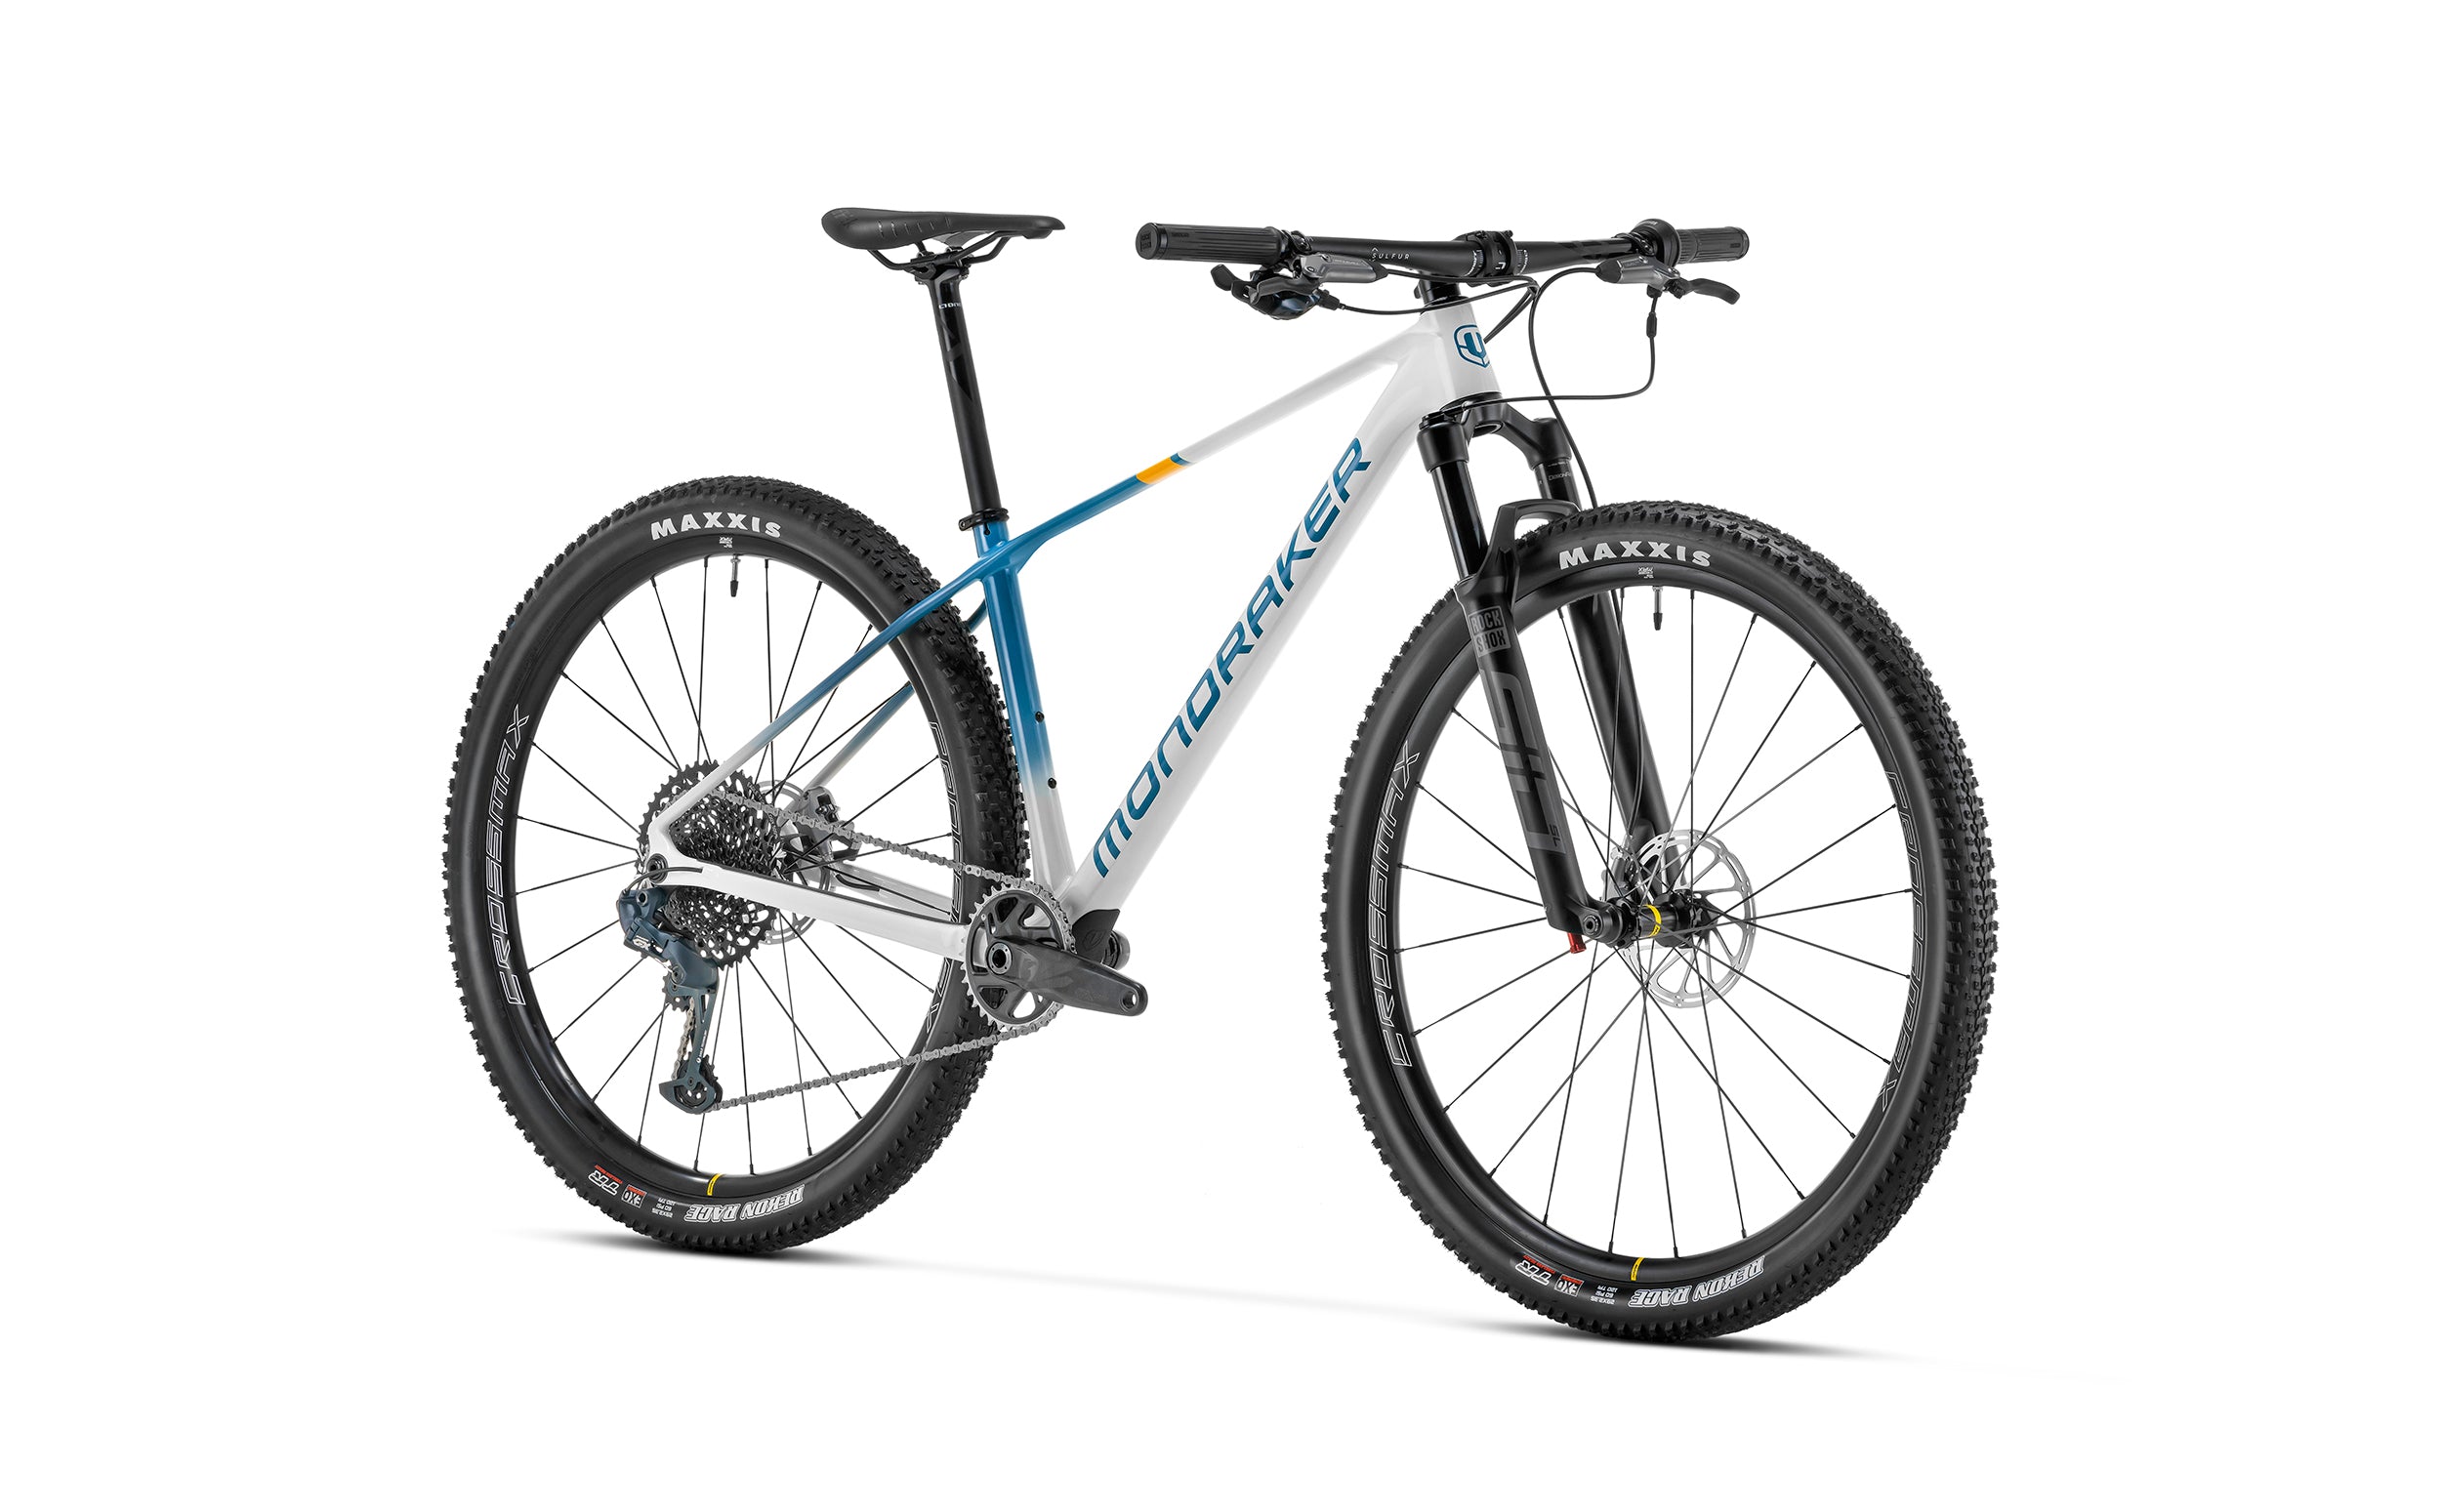 Mondraker Podium Carbon grey - Premium Bikeshop